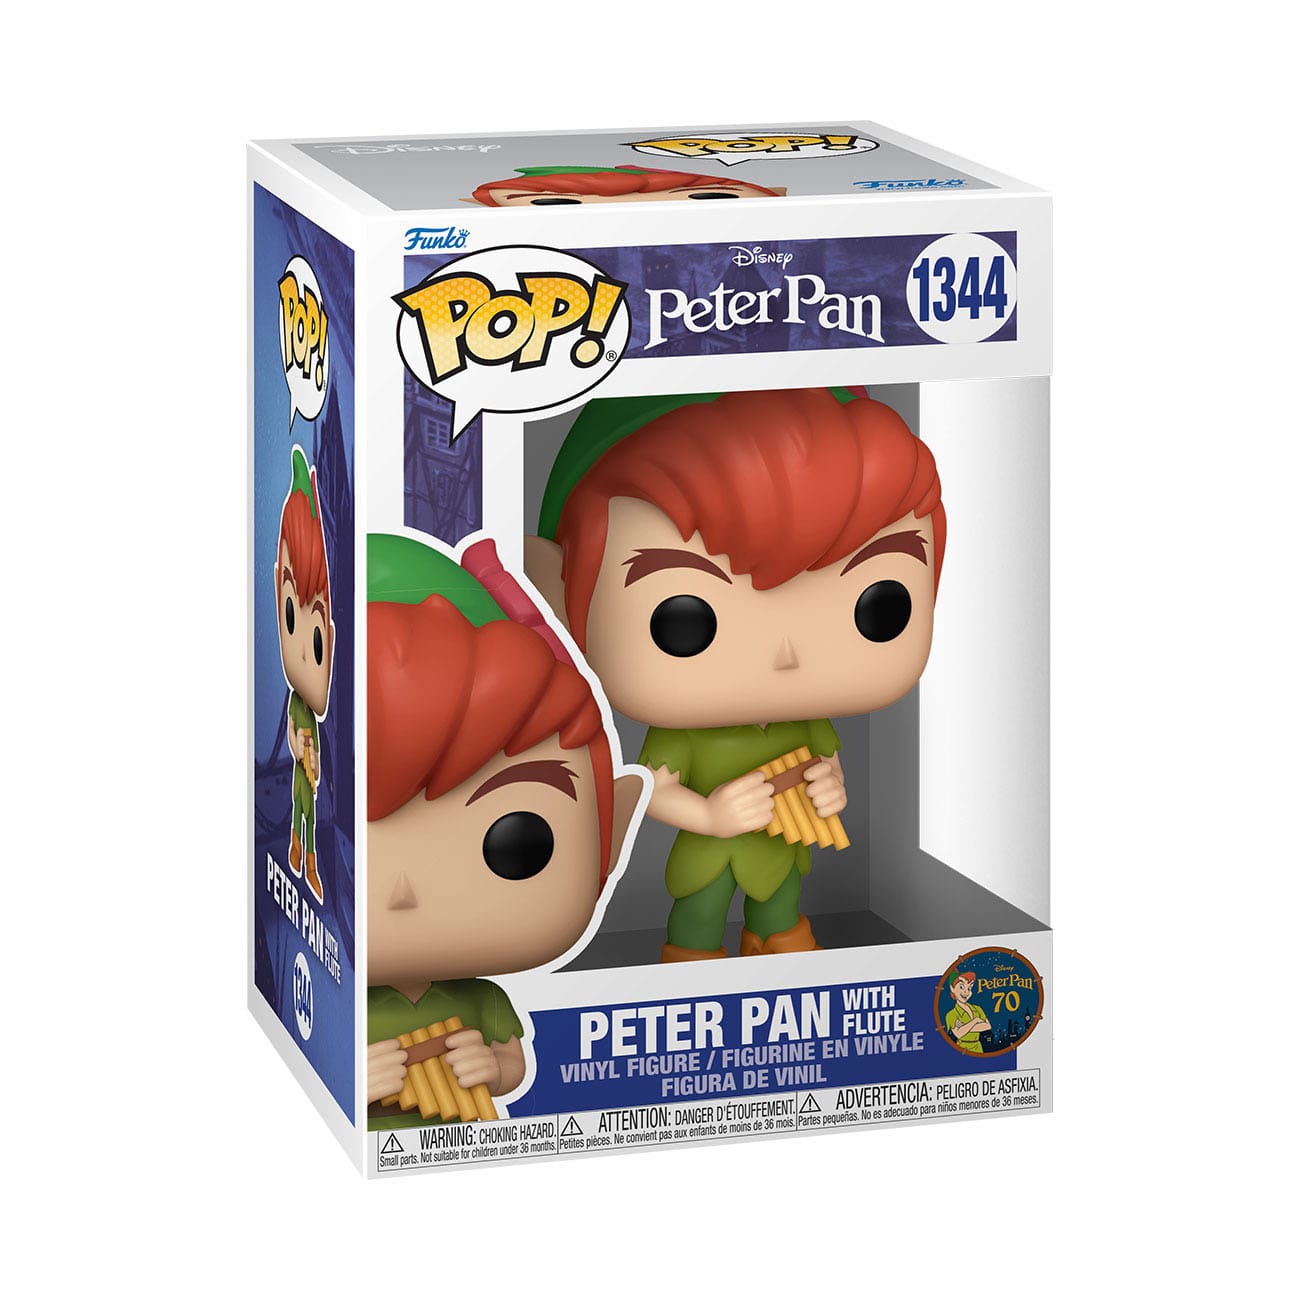 Vinyl Funko POP! Peter Pan - Peter Pan With Flute 1344